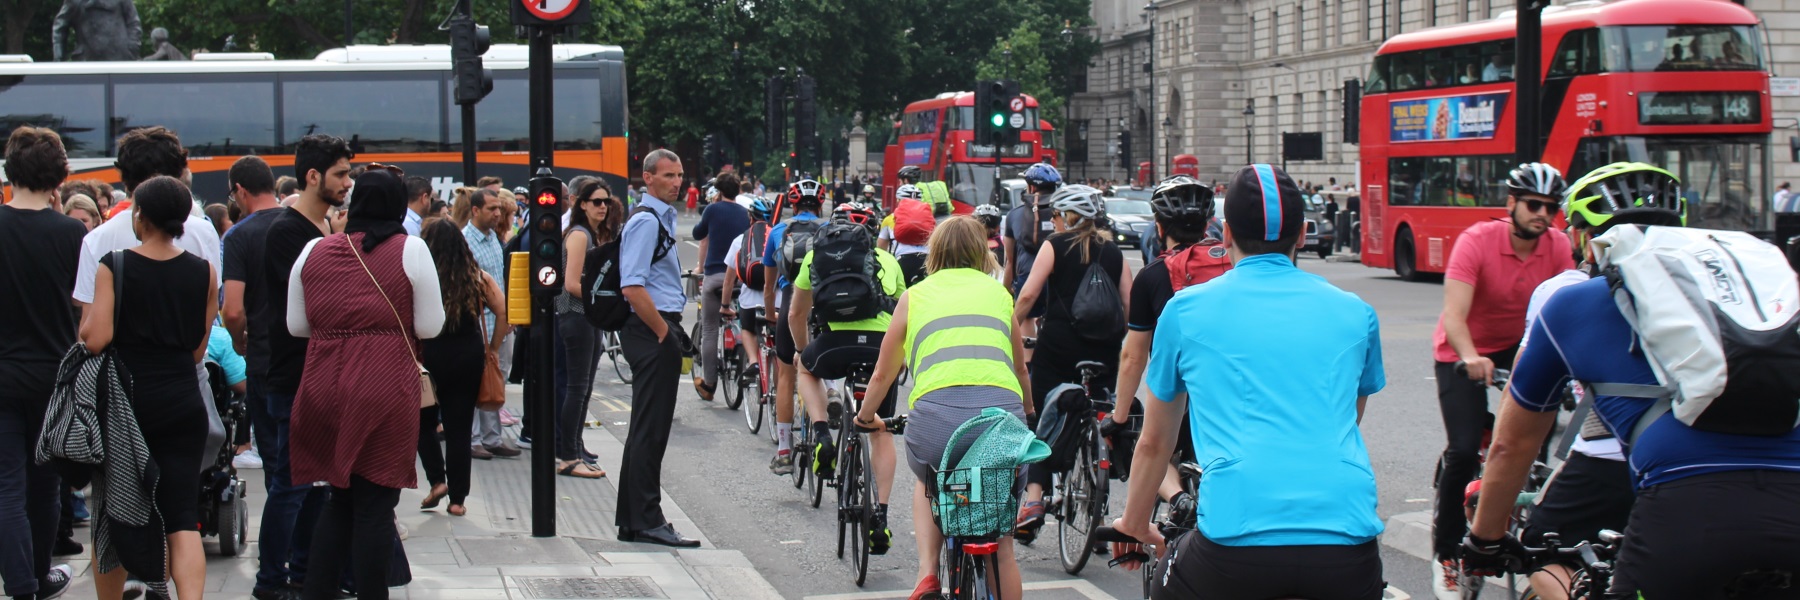 London cycle superhighway